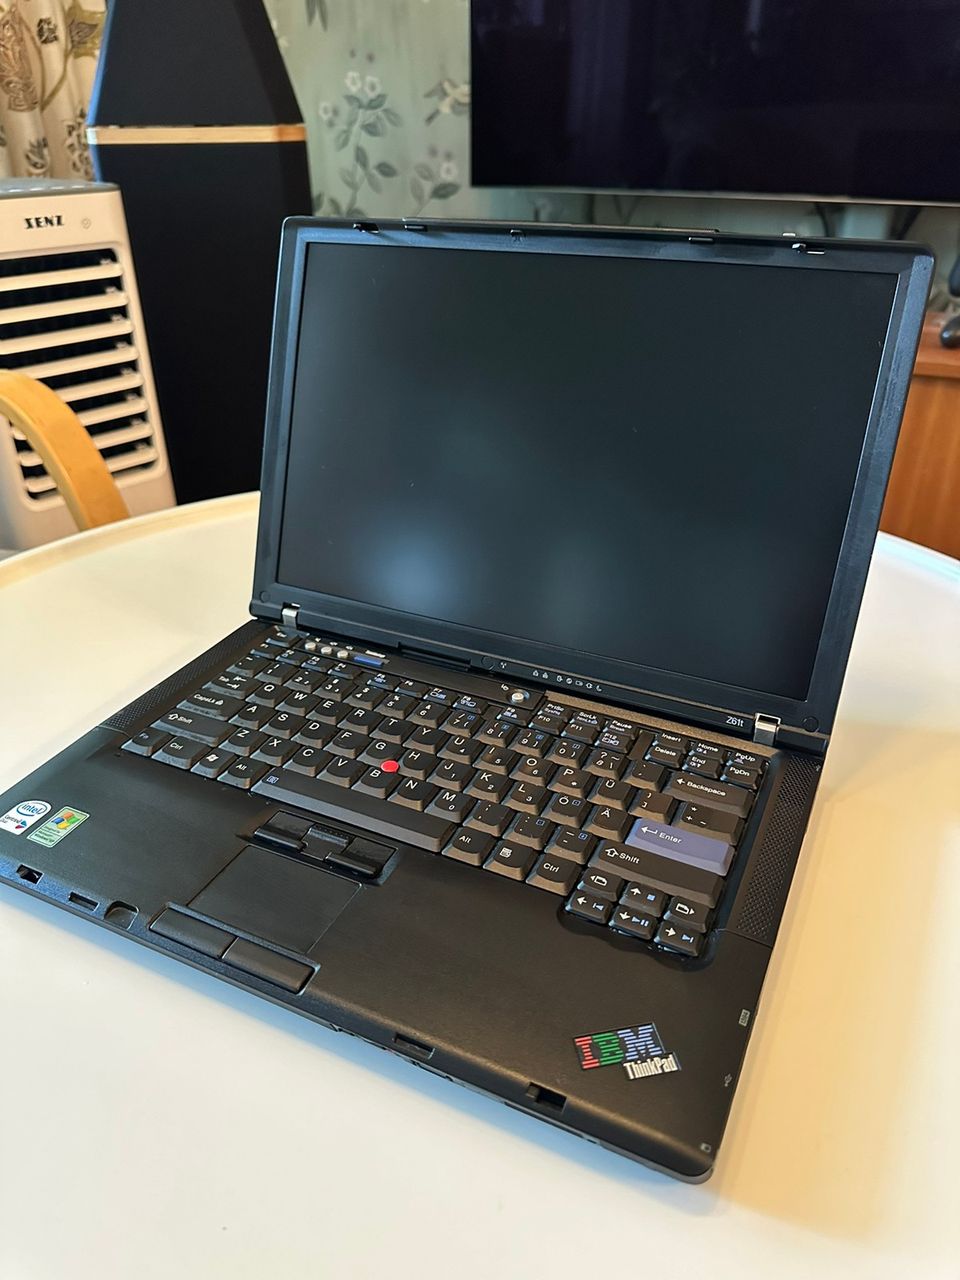 Lenovo ThinkPad Z61t (1.83 GHz/Intel 945G/4GB/60Gt/14.1”)